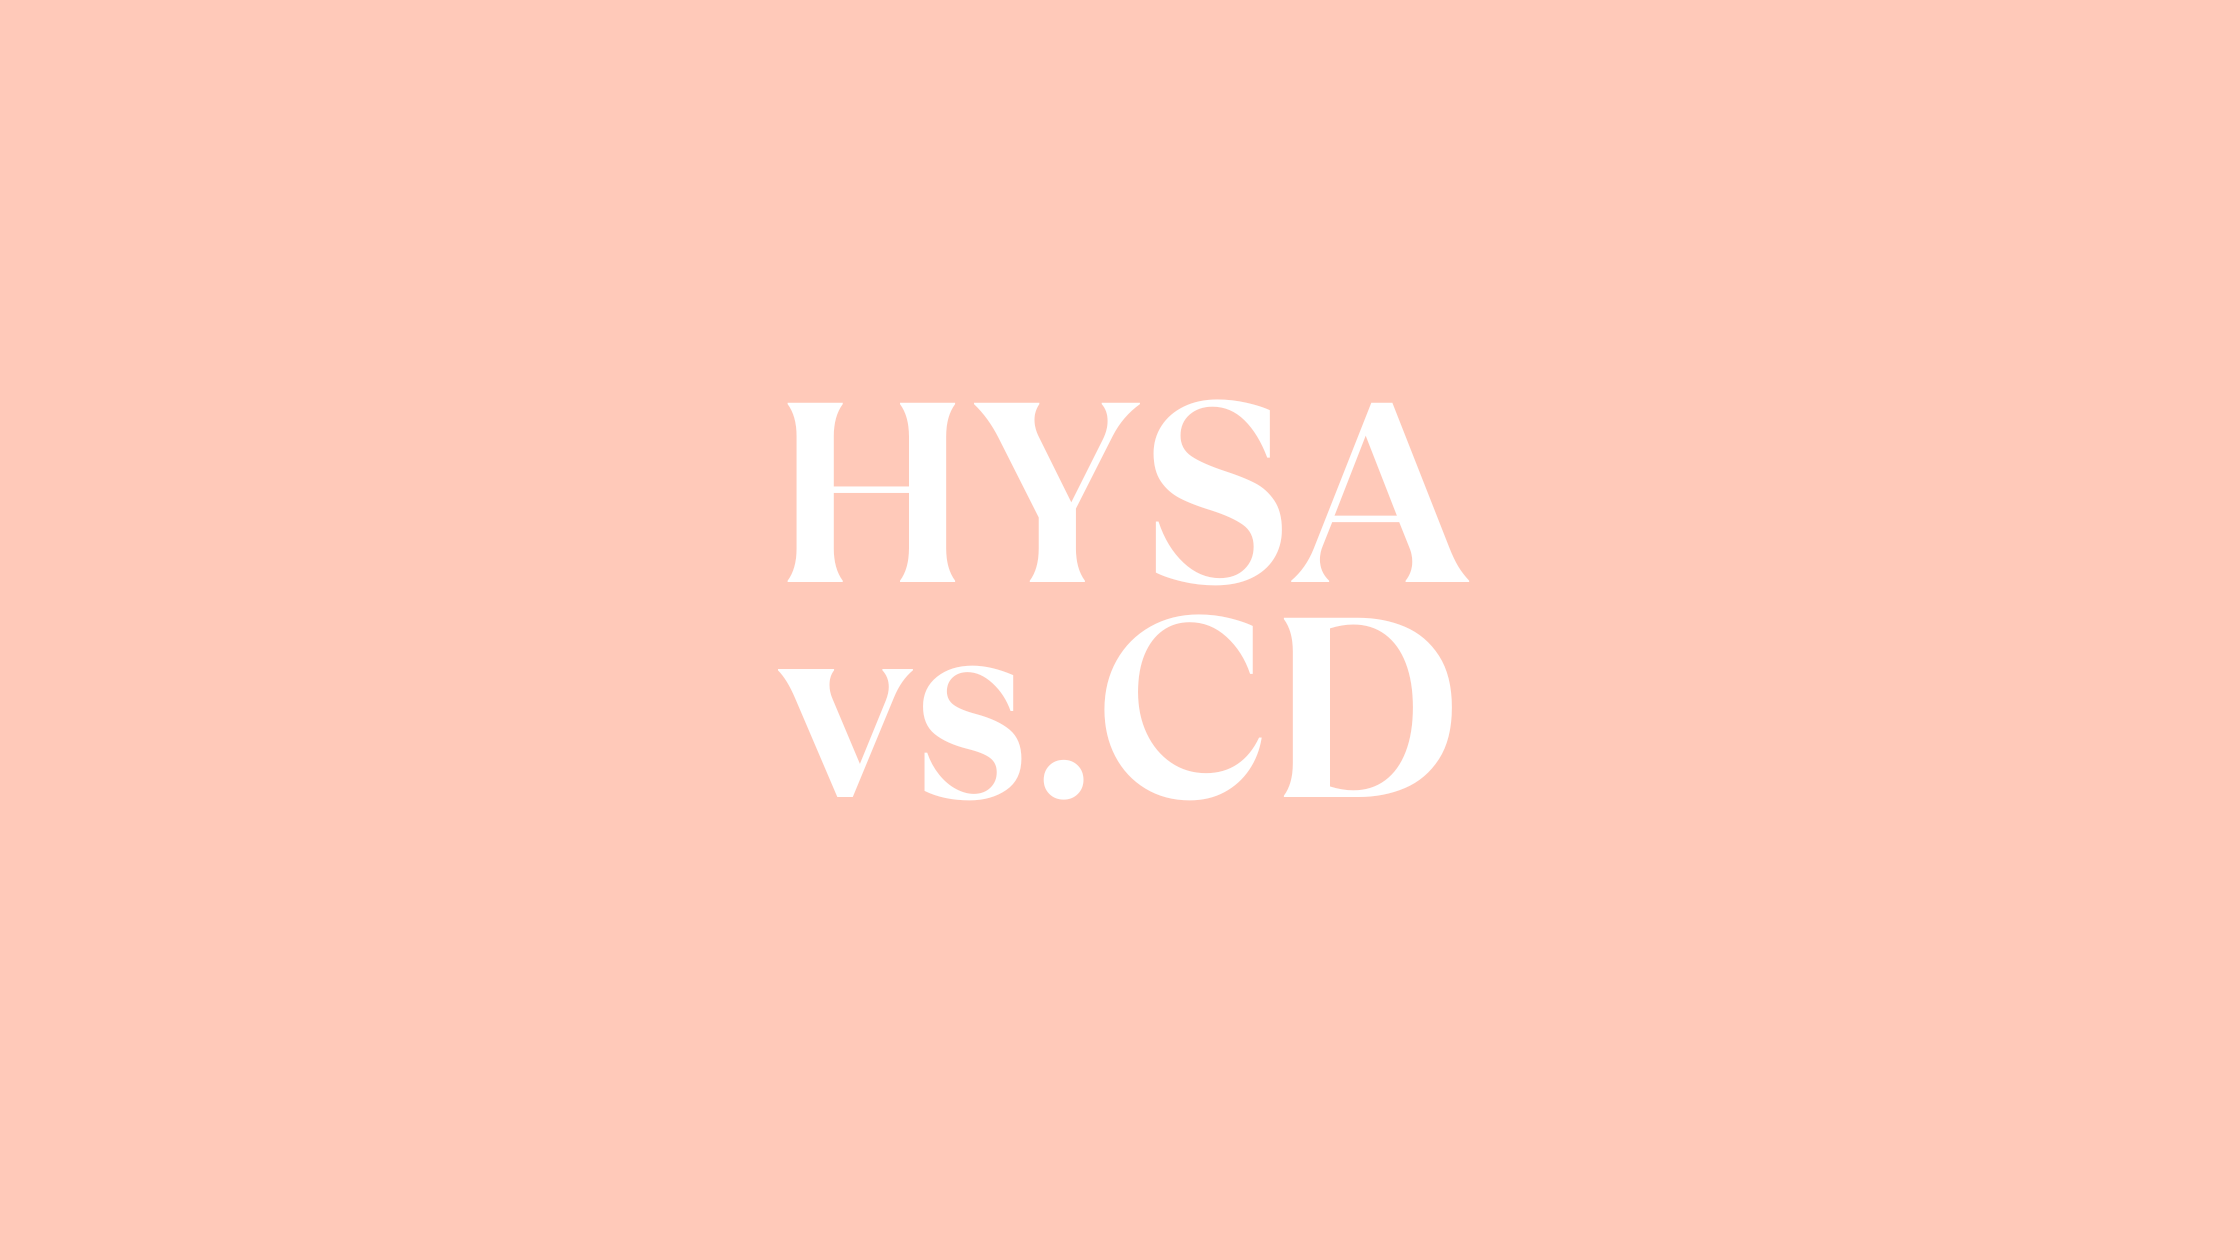 HYSA vs. CD